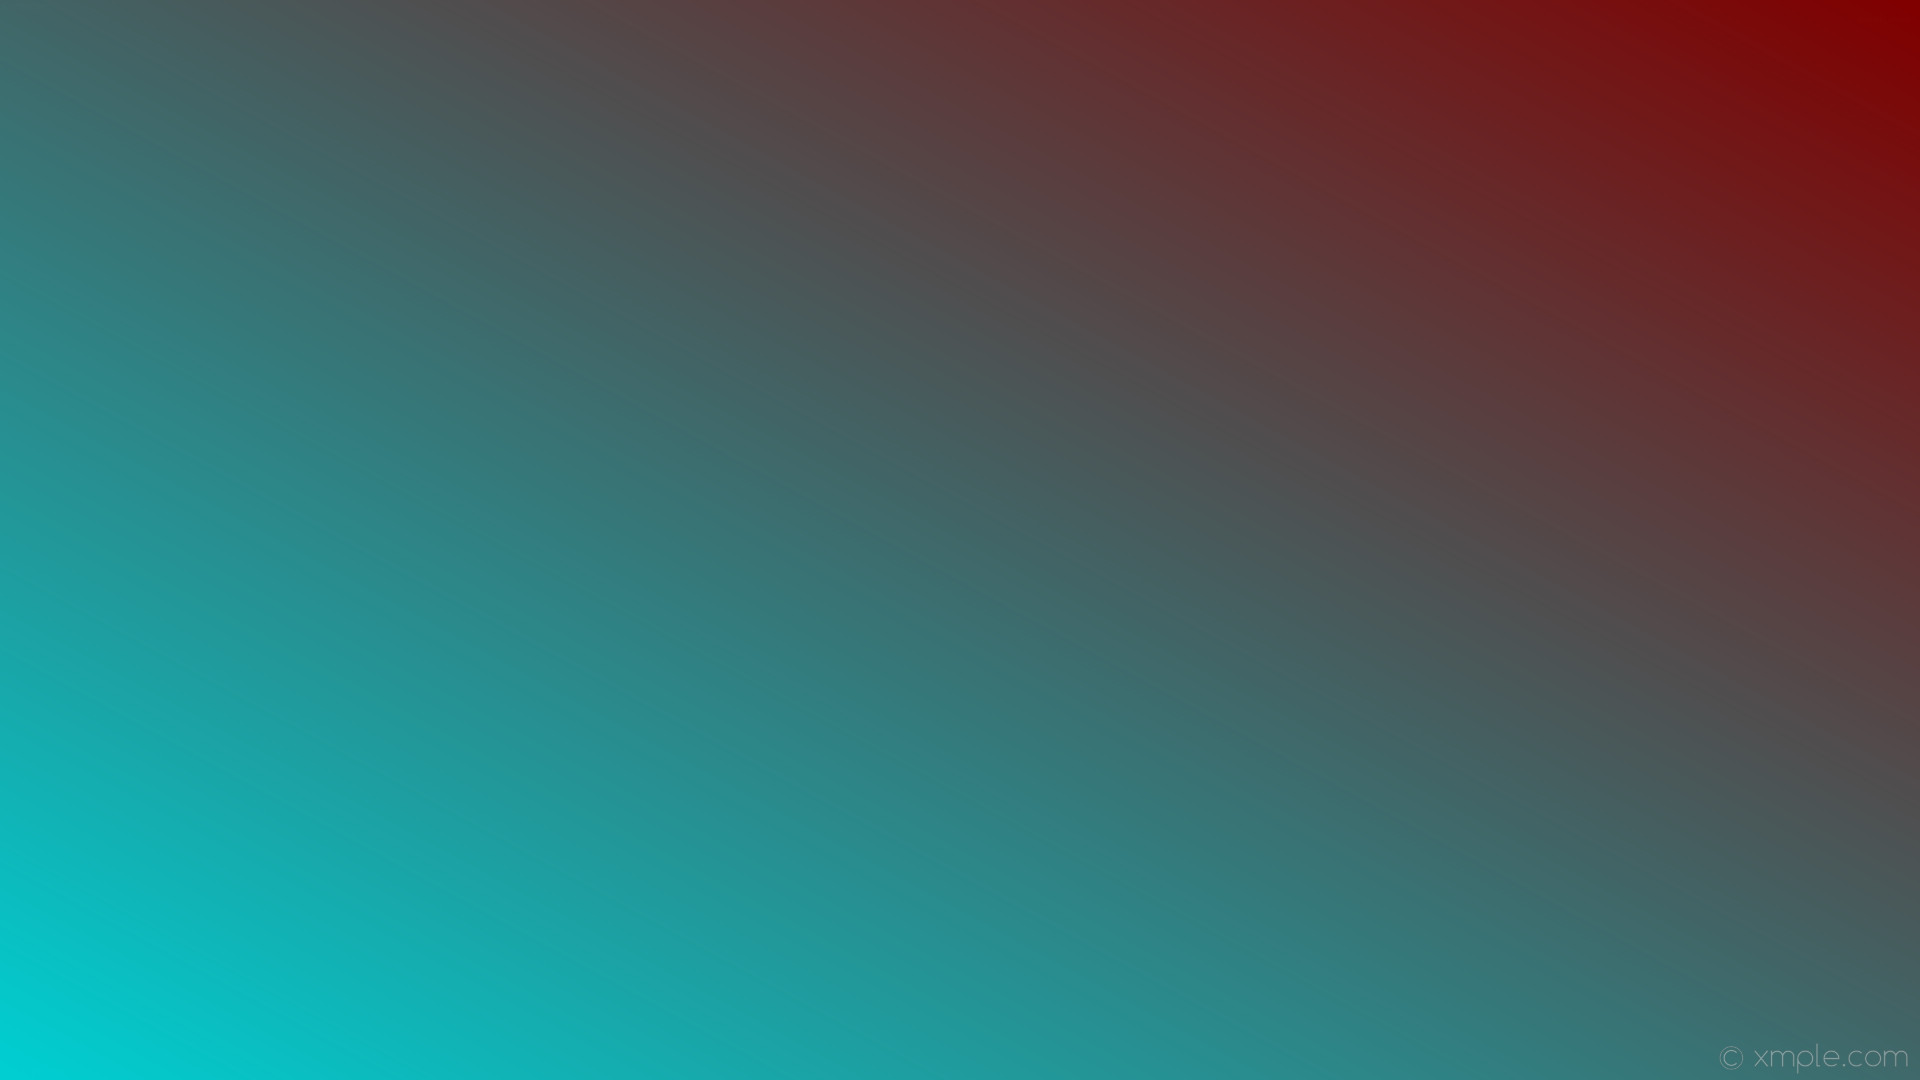 Wallpaper gradient brown linear blue dark turquoise maroon ced1 210